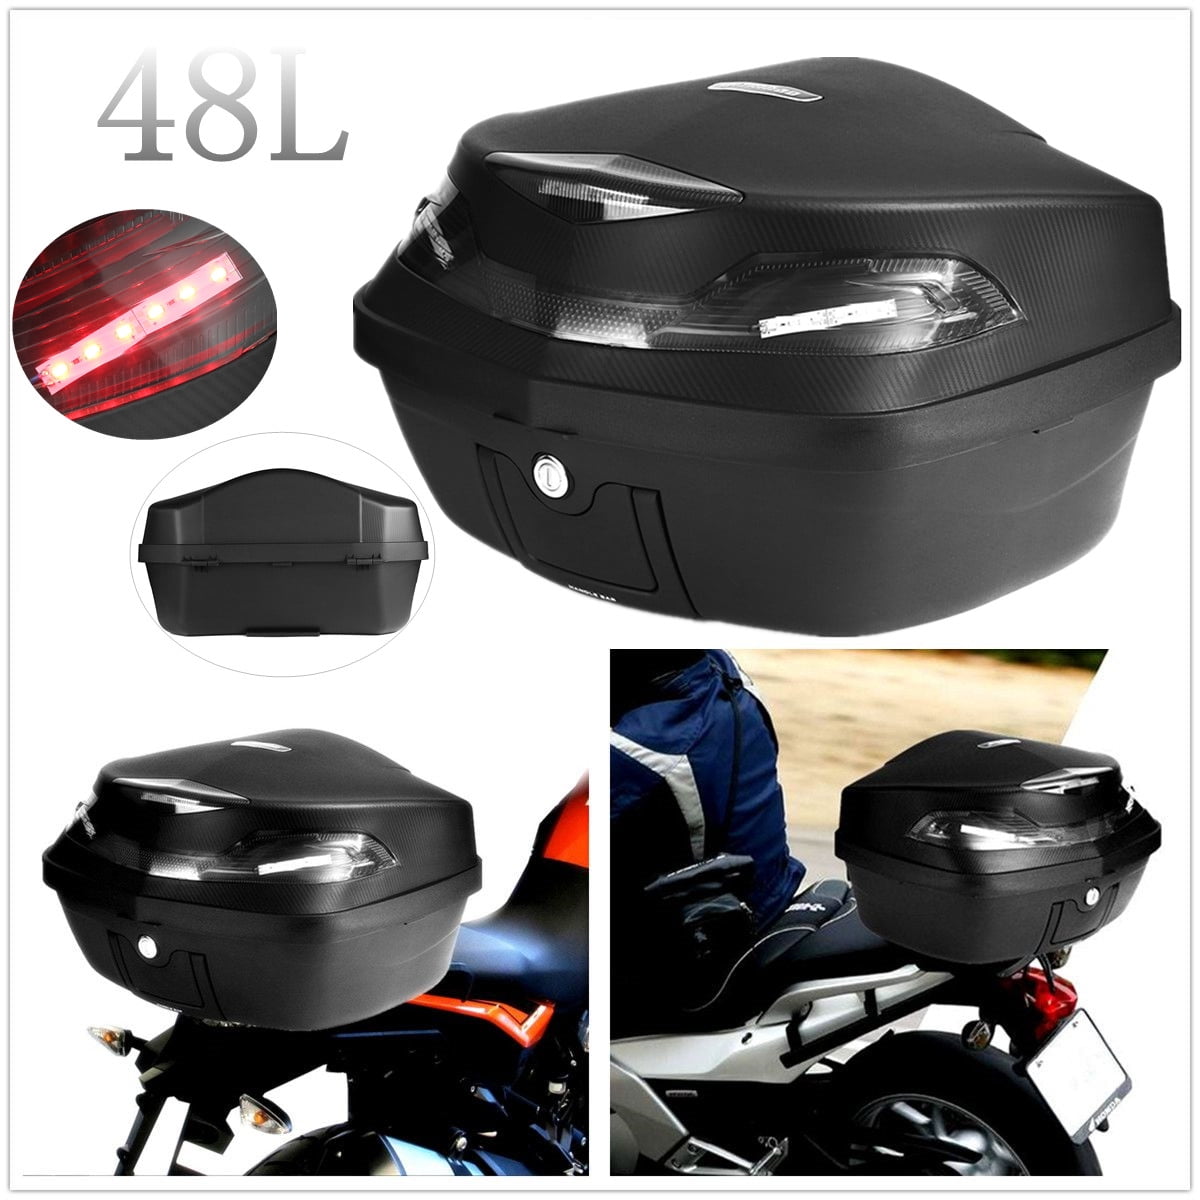 ZHANGAO 48L Motorcycle Scooter Top Box Topbox Rear Luggage Storage W/LED Light Universal Decorative lights